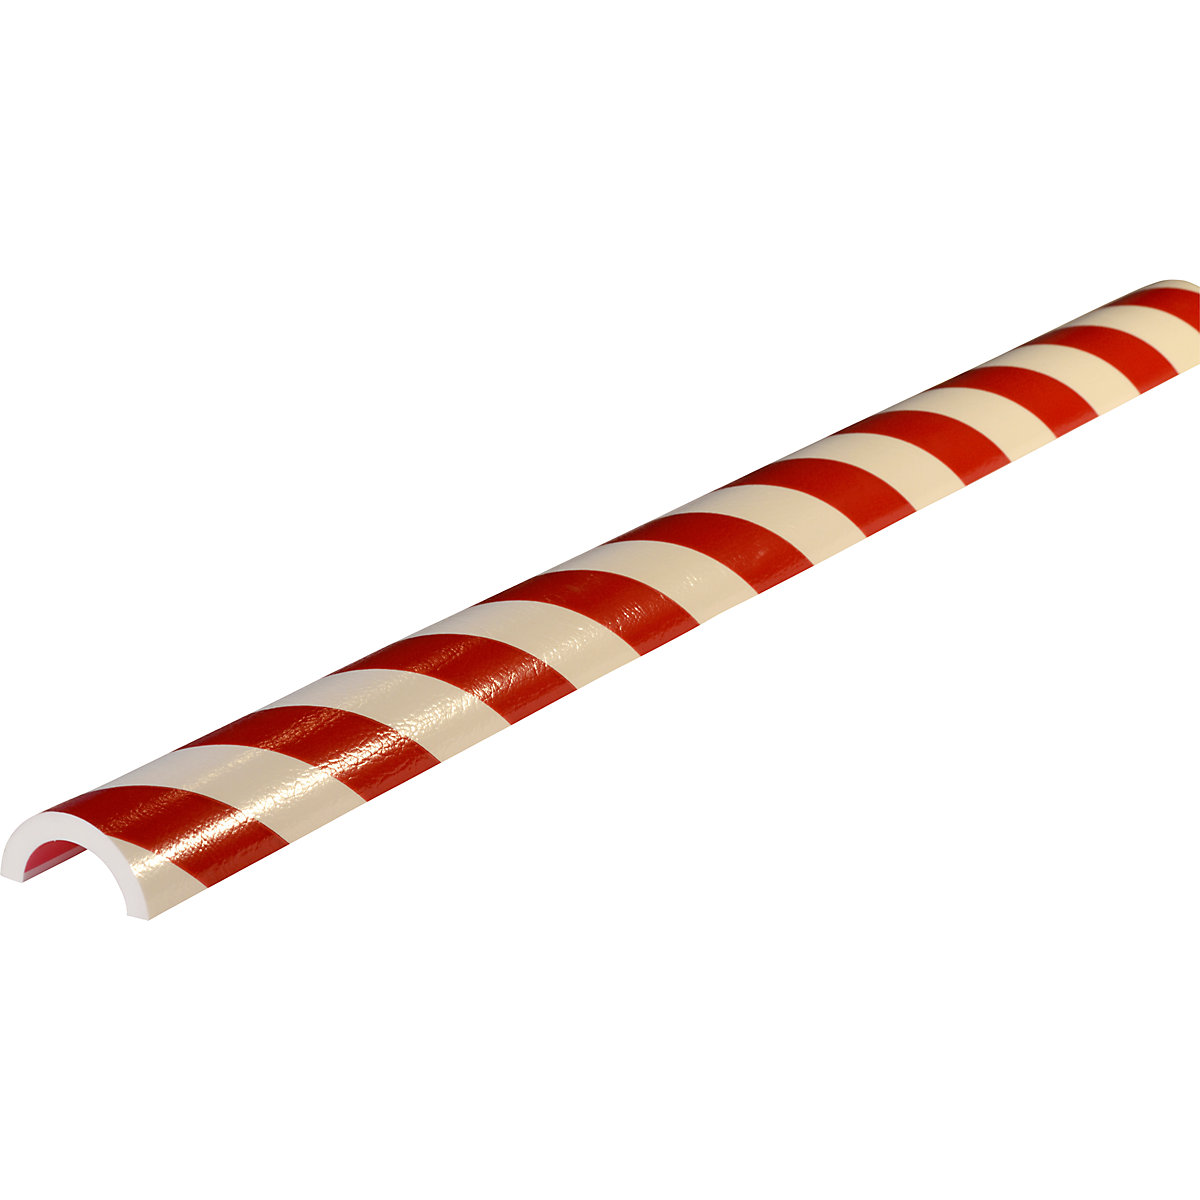 Knuffi®-buisbescherming – SHG, type R50, stuk van 1 m, rood/wit-9